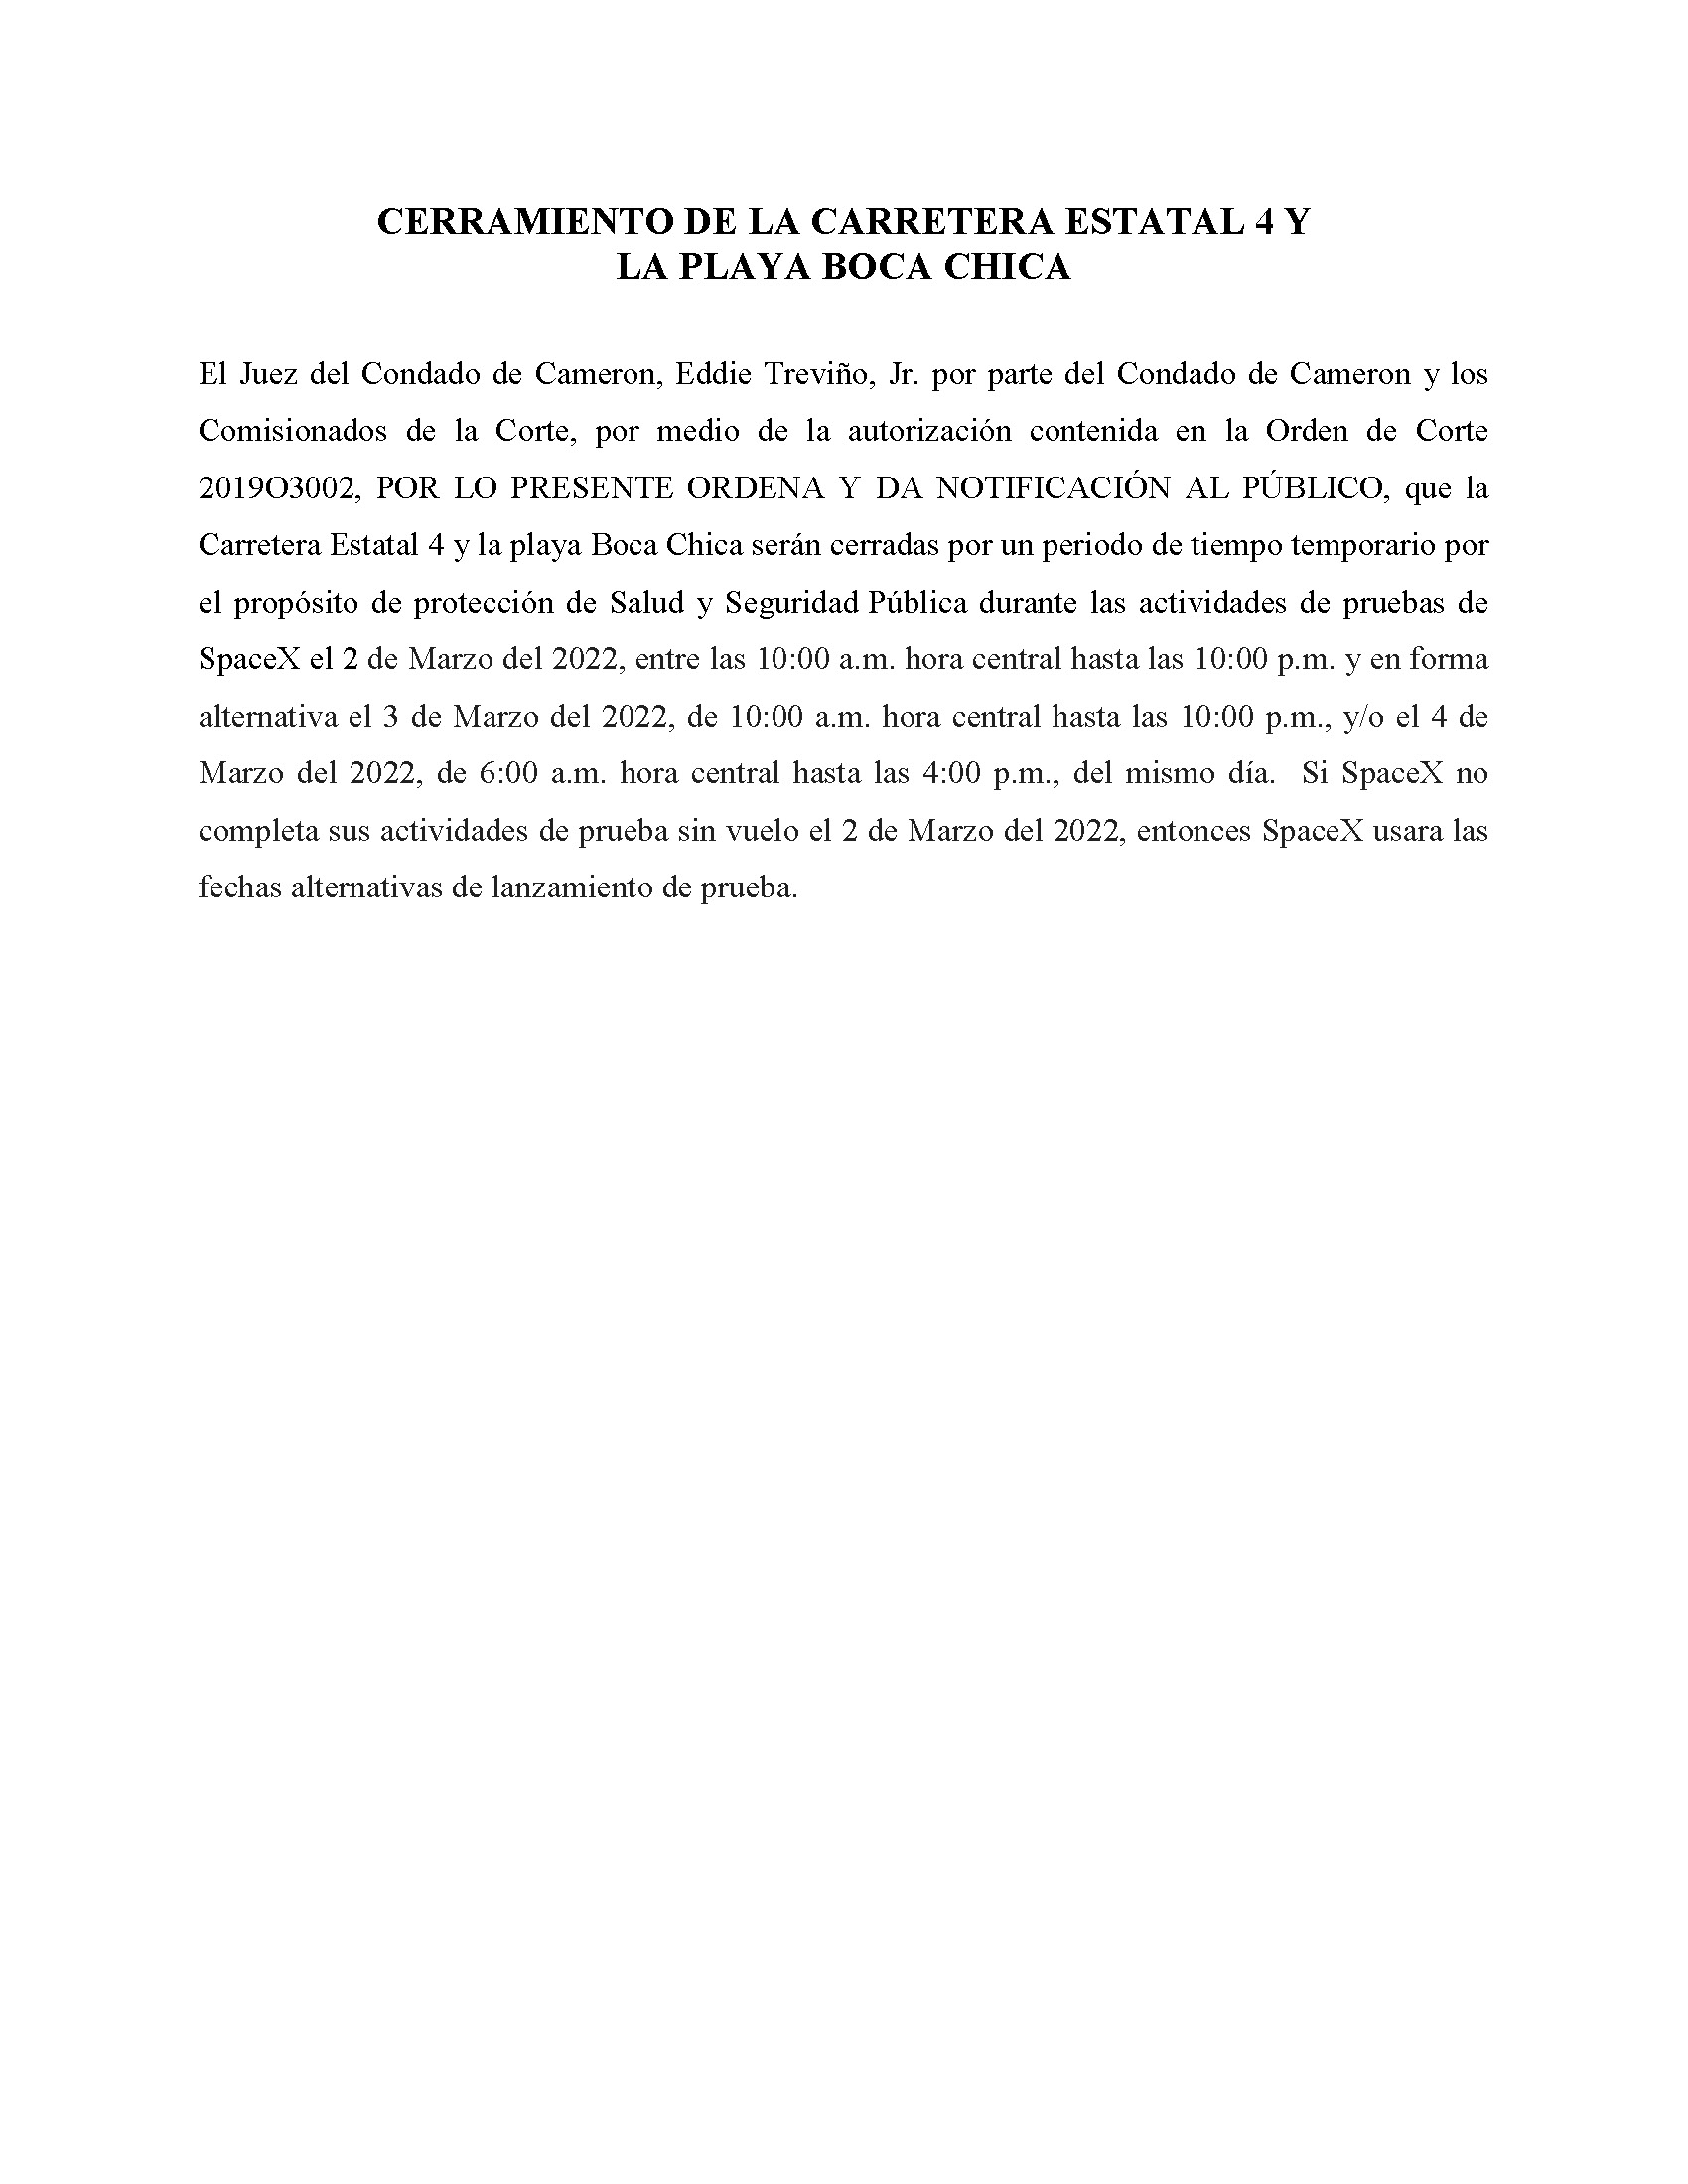 ORDER.CLOSURE OF HIGHWAY 4 Y LA PLAYA BOCA CHICA.SPANISH.03.02.2022